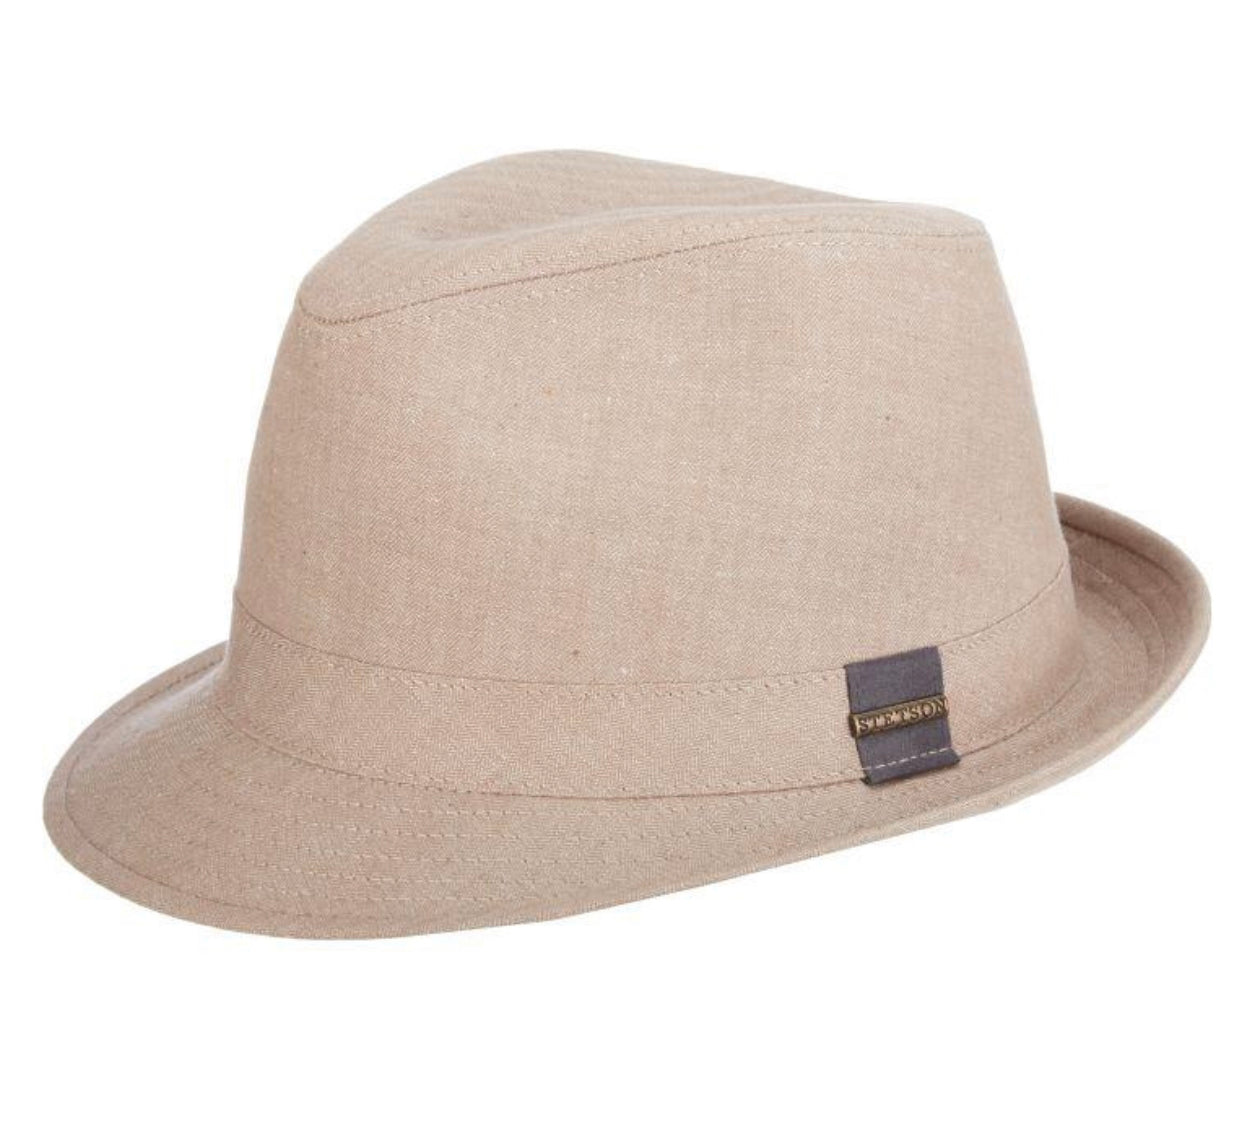 Men Fedora Hat-StC307C-Tan - Church Suits For Less